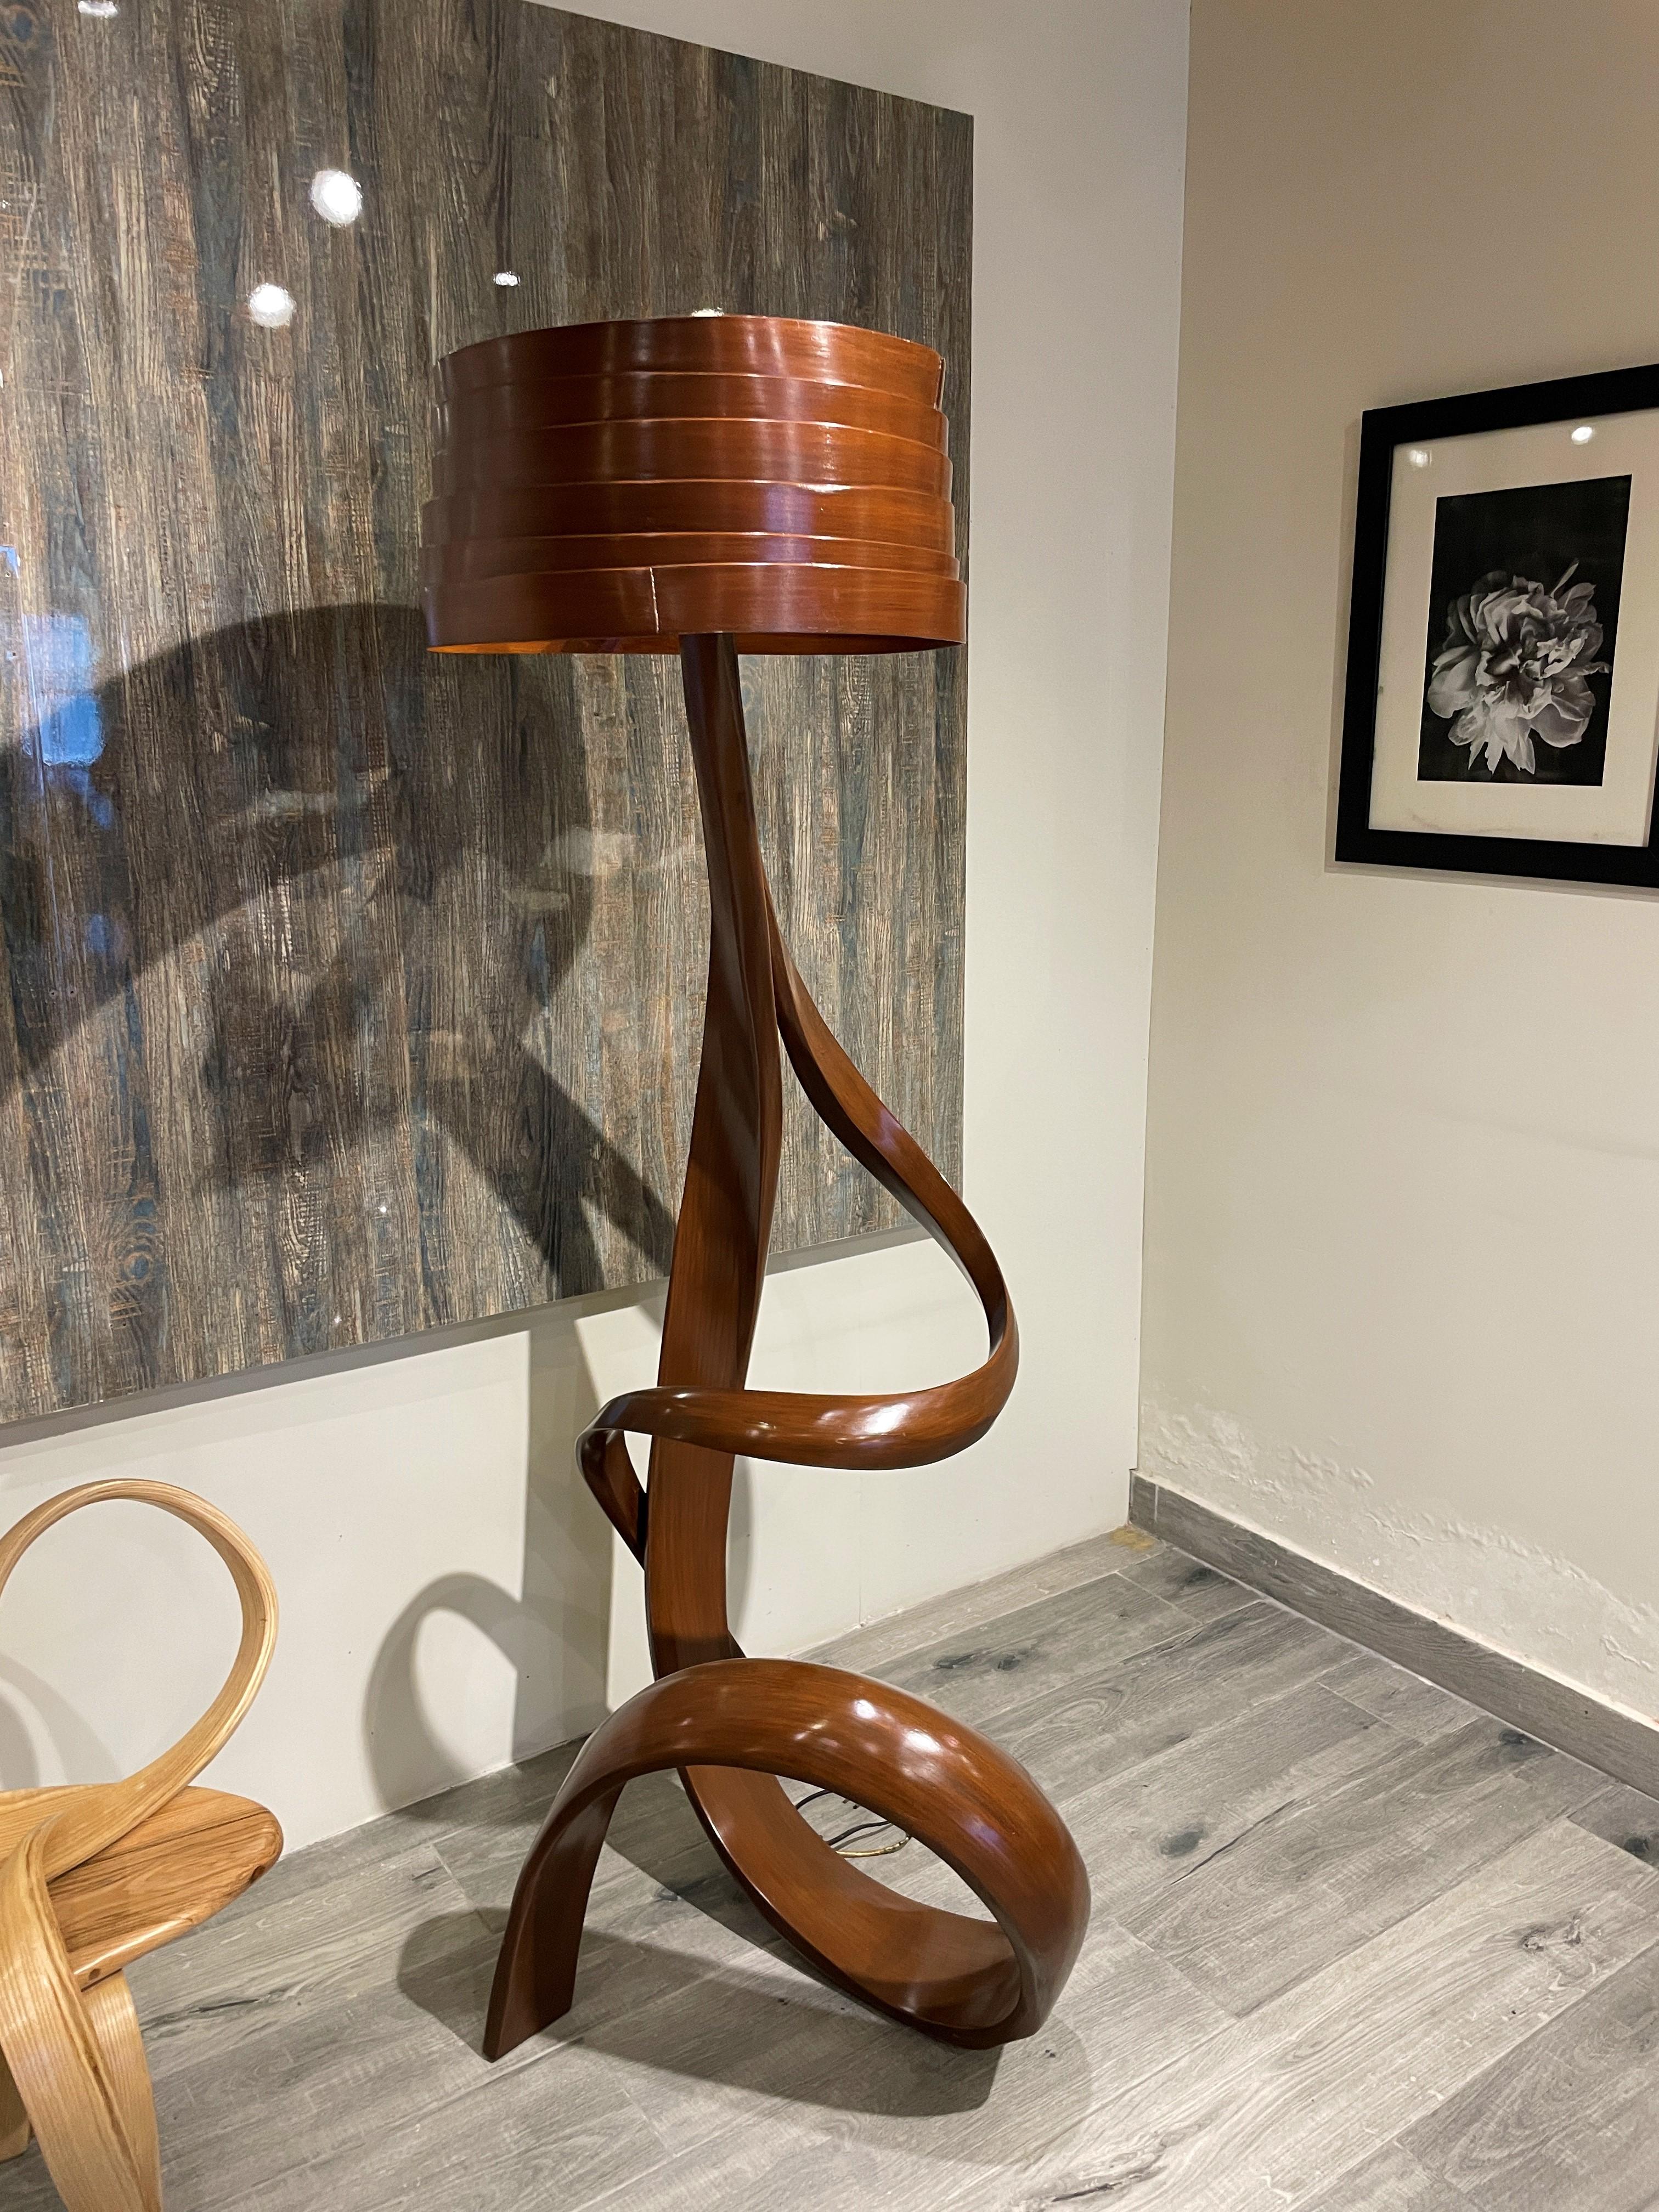 Woodwork Floor Lamp No. 1 - Fluentum Series, in solid ash wood by Raka Studio For Sale